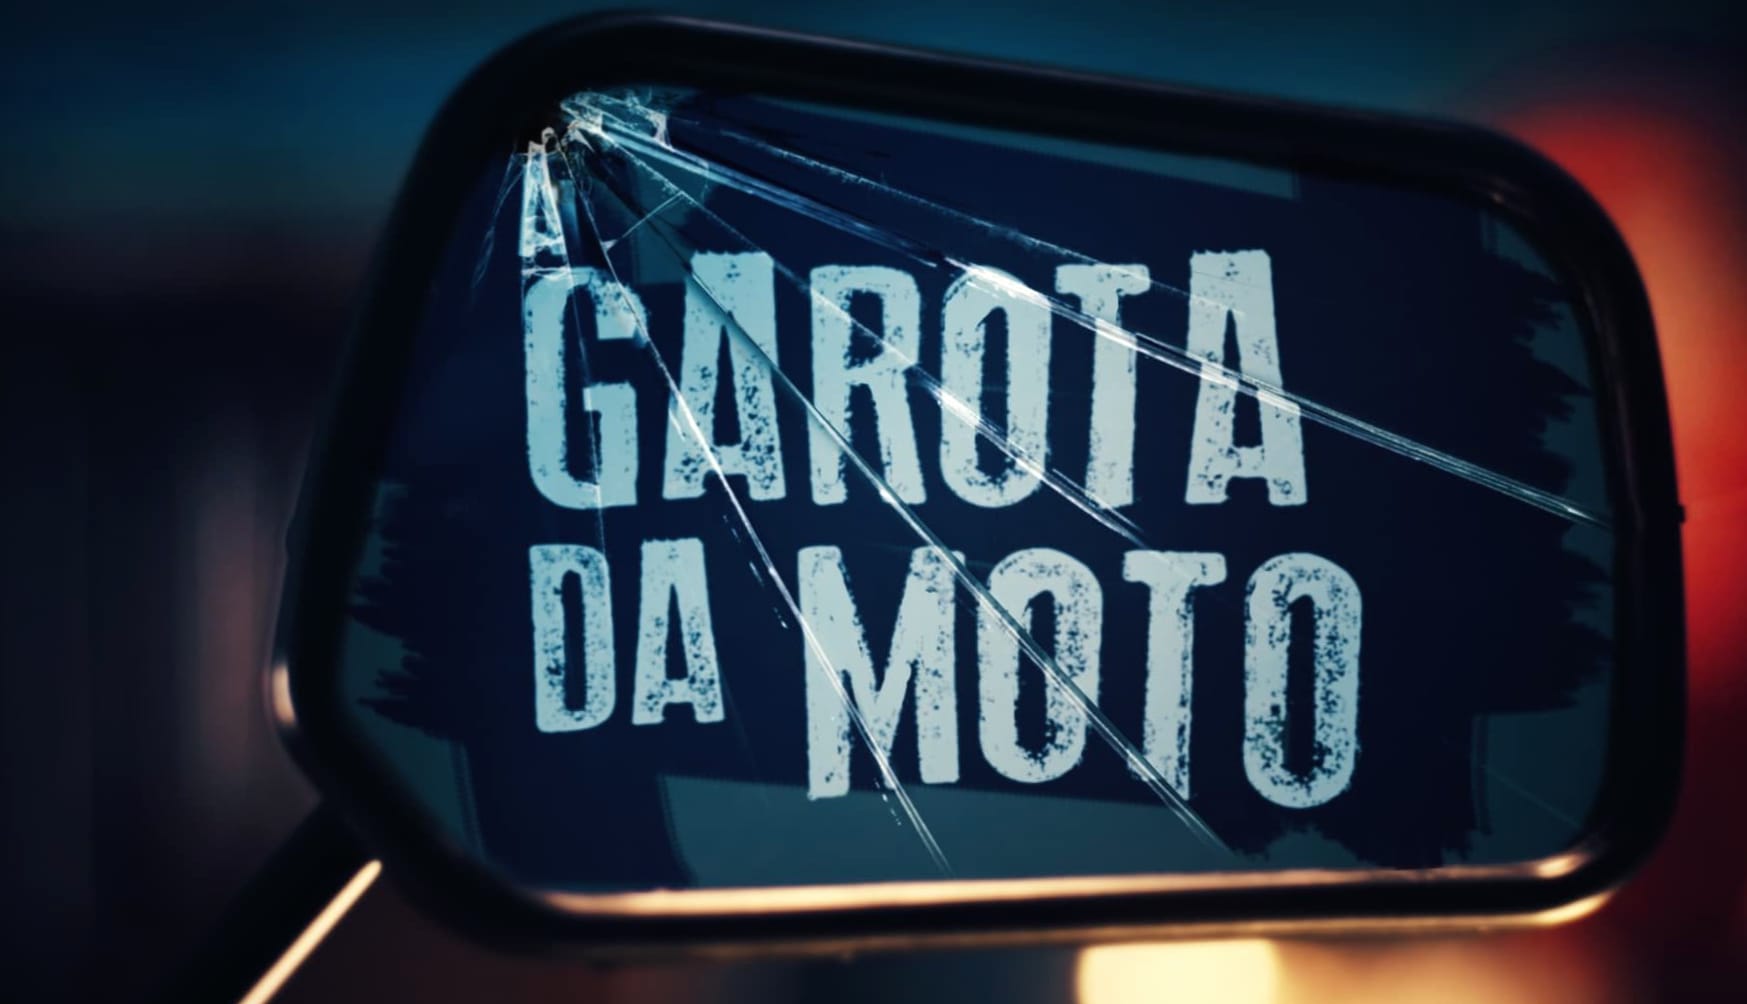 A Garota da Moto at 750 x 1334 iPhone 6 size wallpapers HD quality